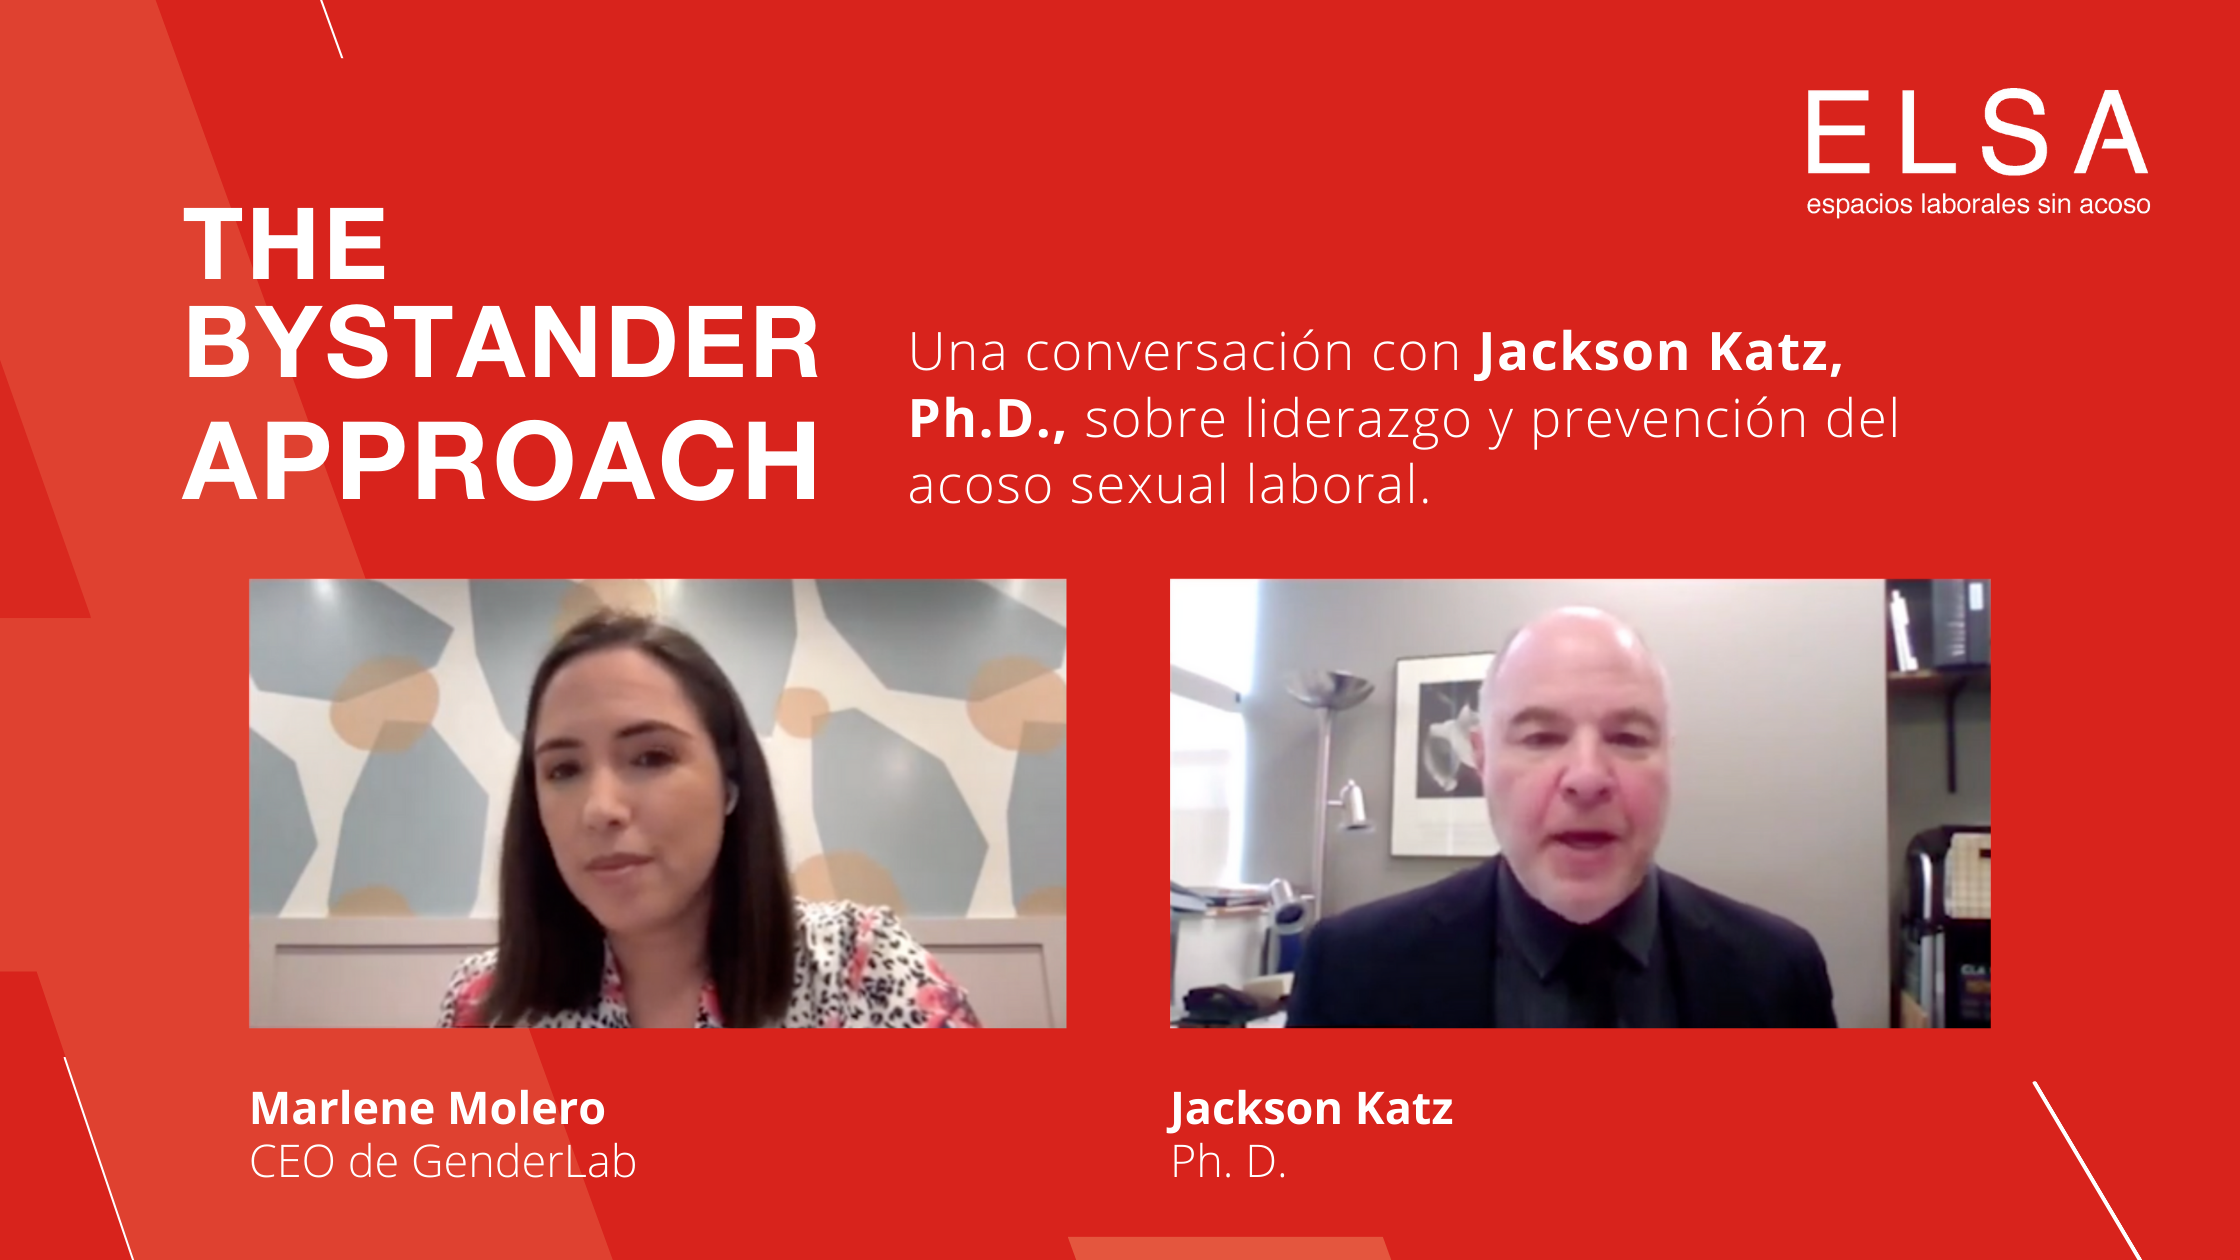 The bystander approach: 3 aprendizajes de nuestra charla con Jackson Katz, Ph.D.